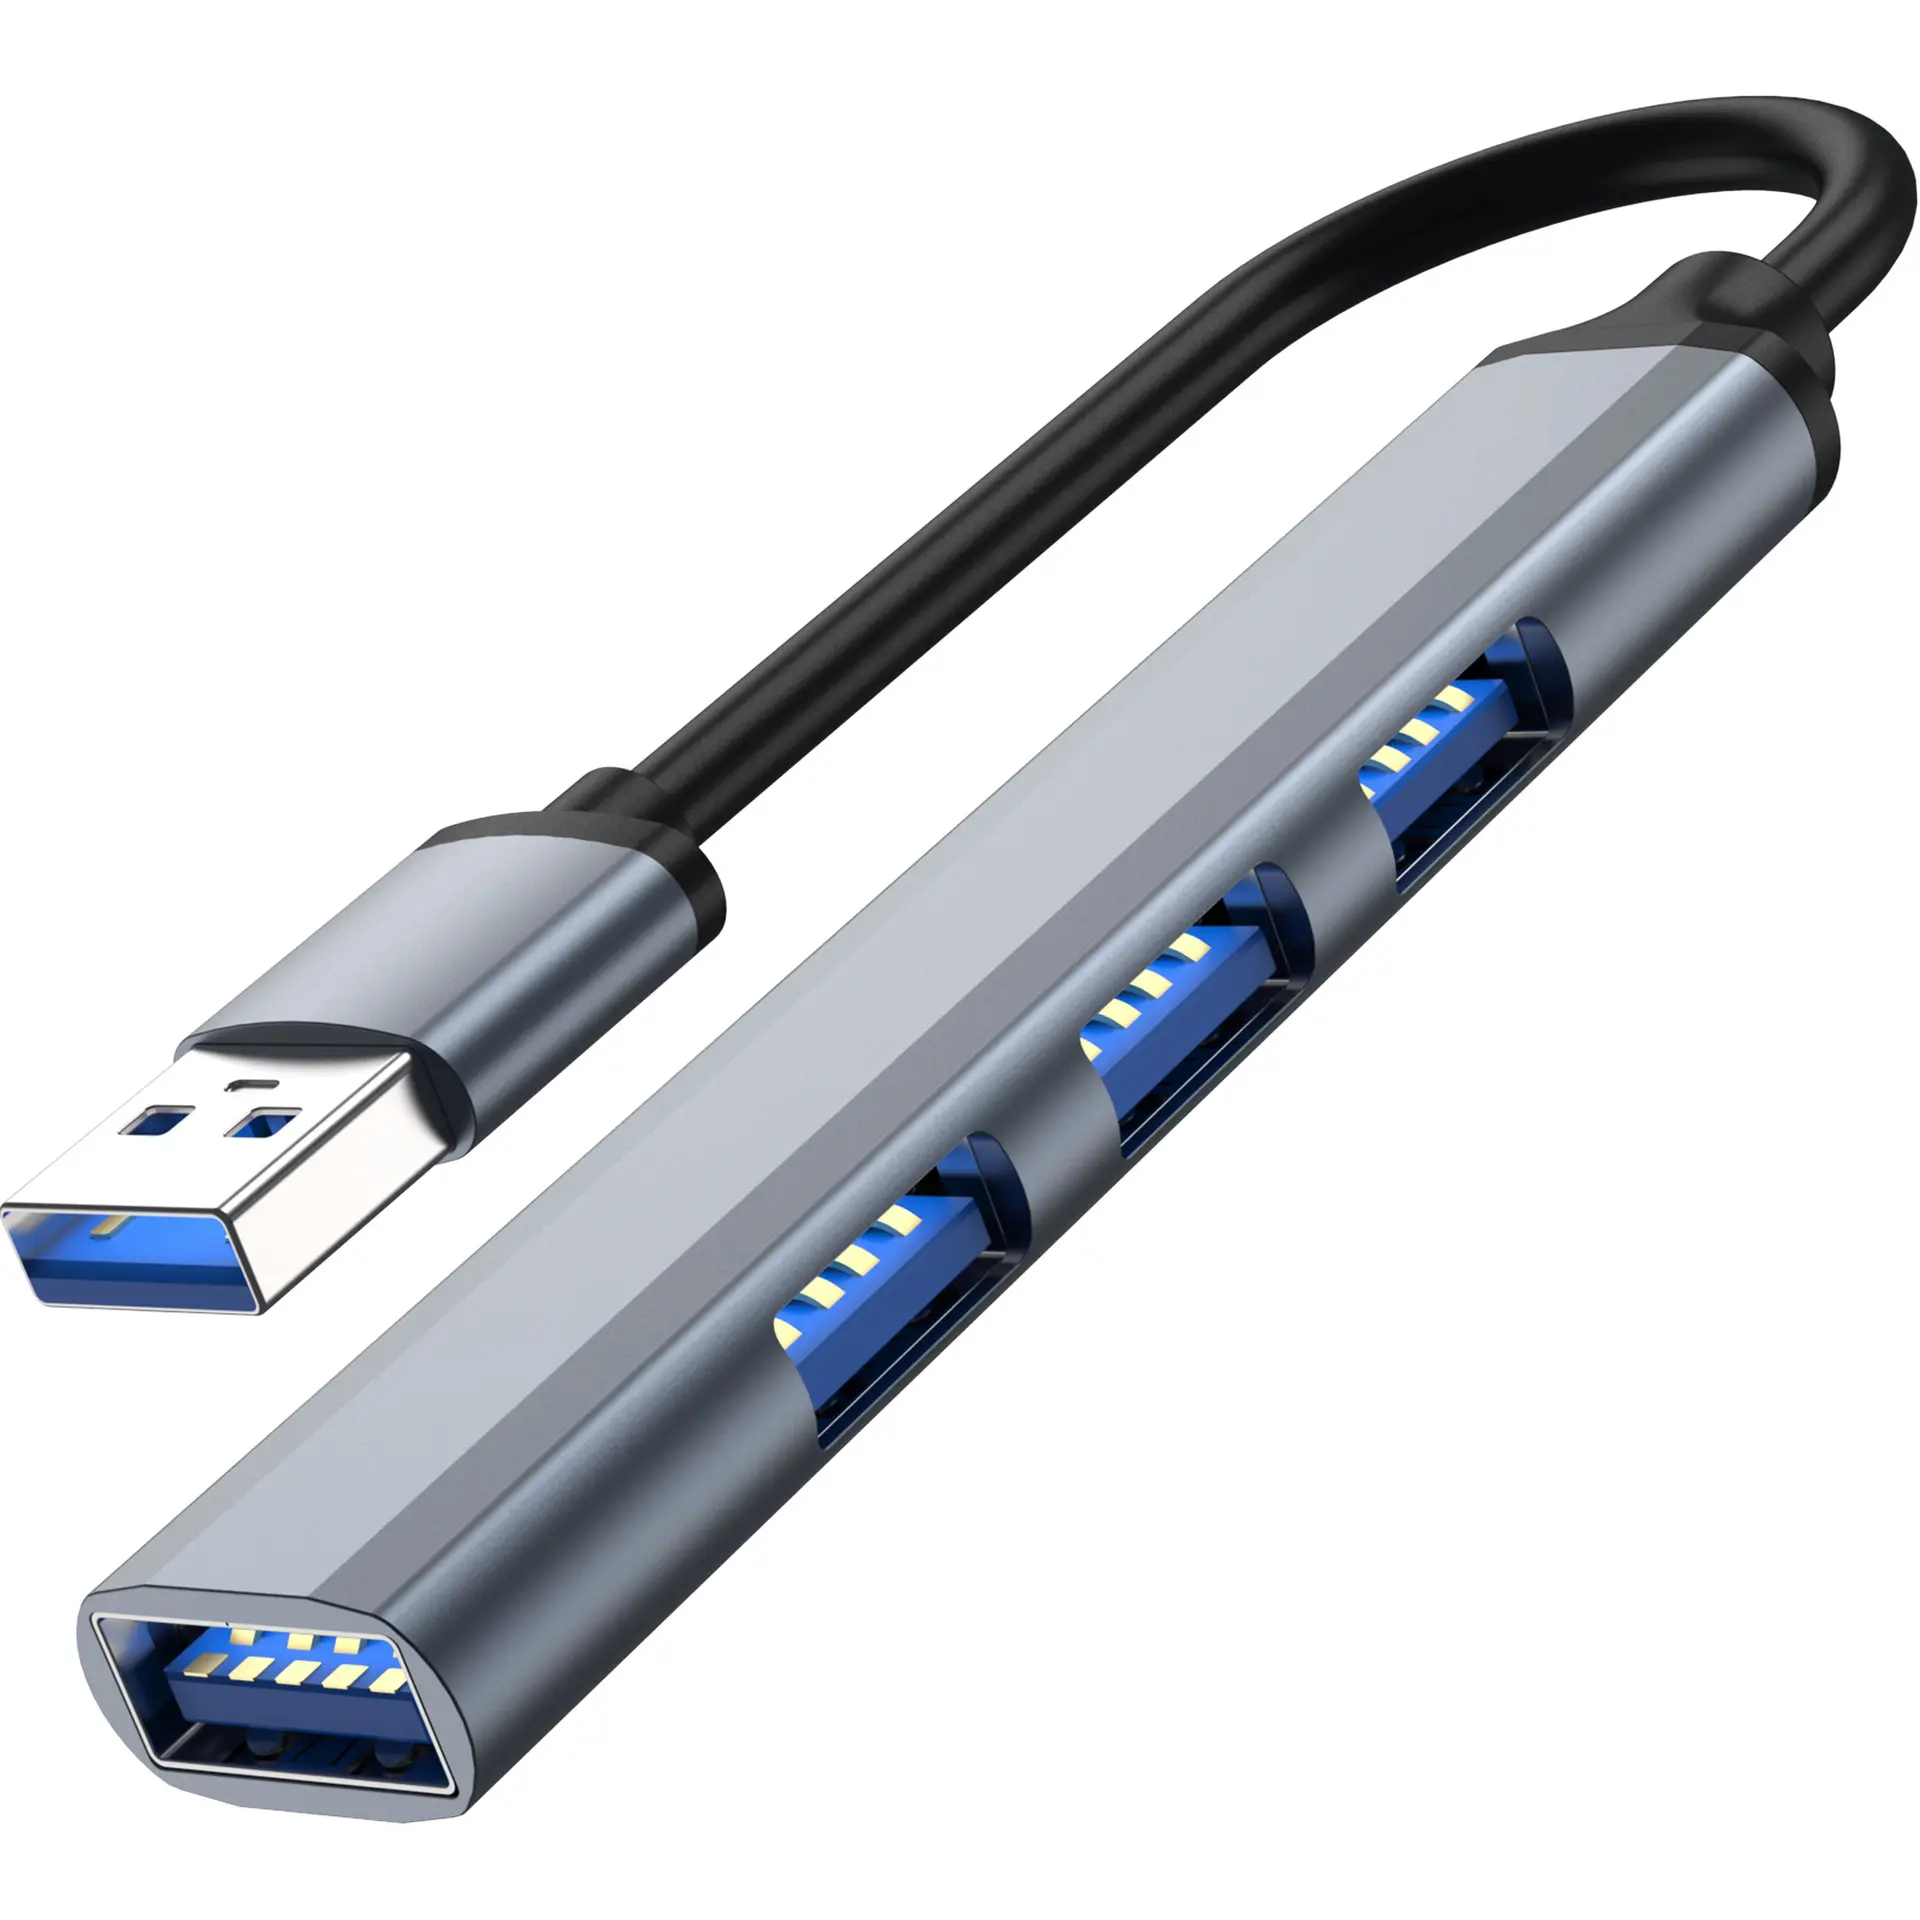 Type C HUB 4 Port USB-C to USB 3.0 2.0 Splitter Converter OTG Adapter Cable for Macbook Pro iMac PC Laptop Notebook USB HUB